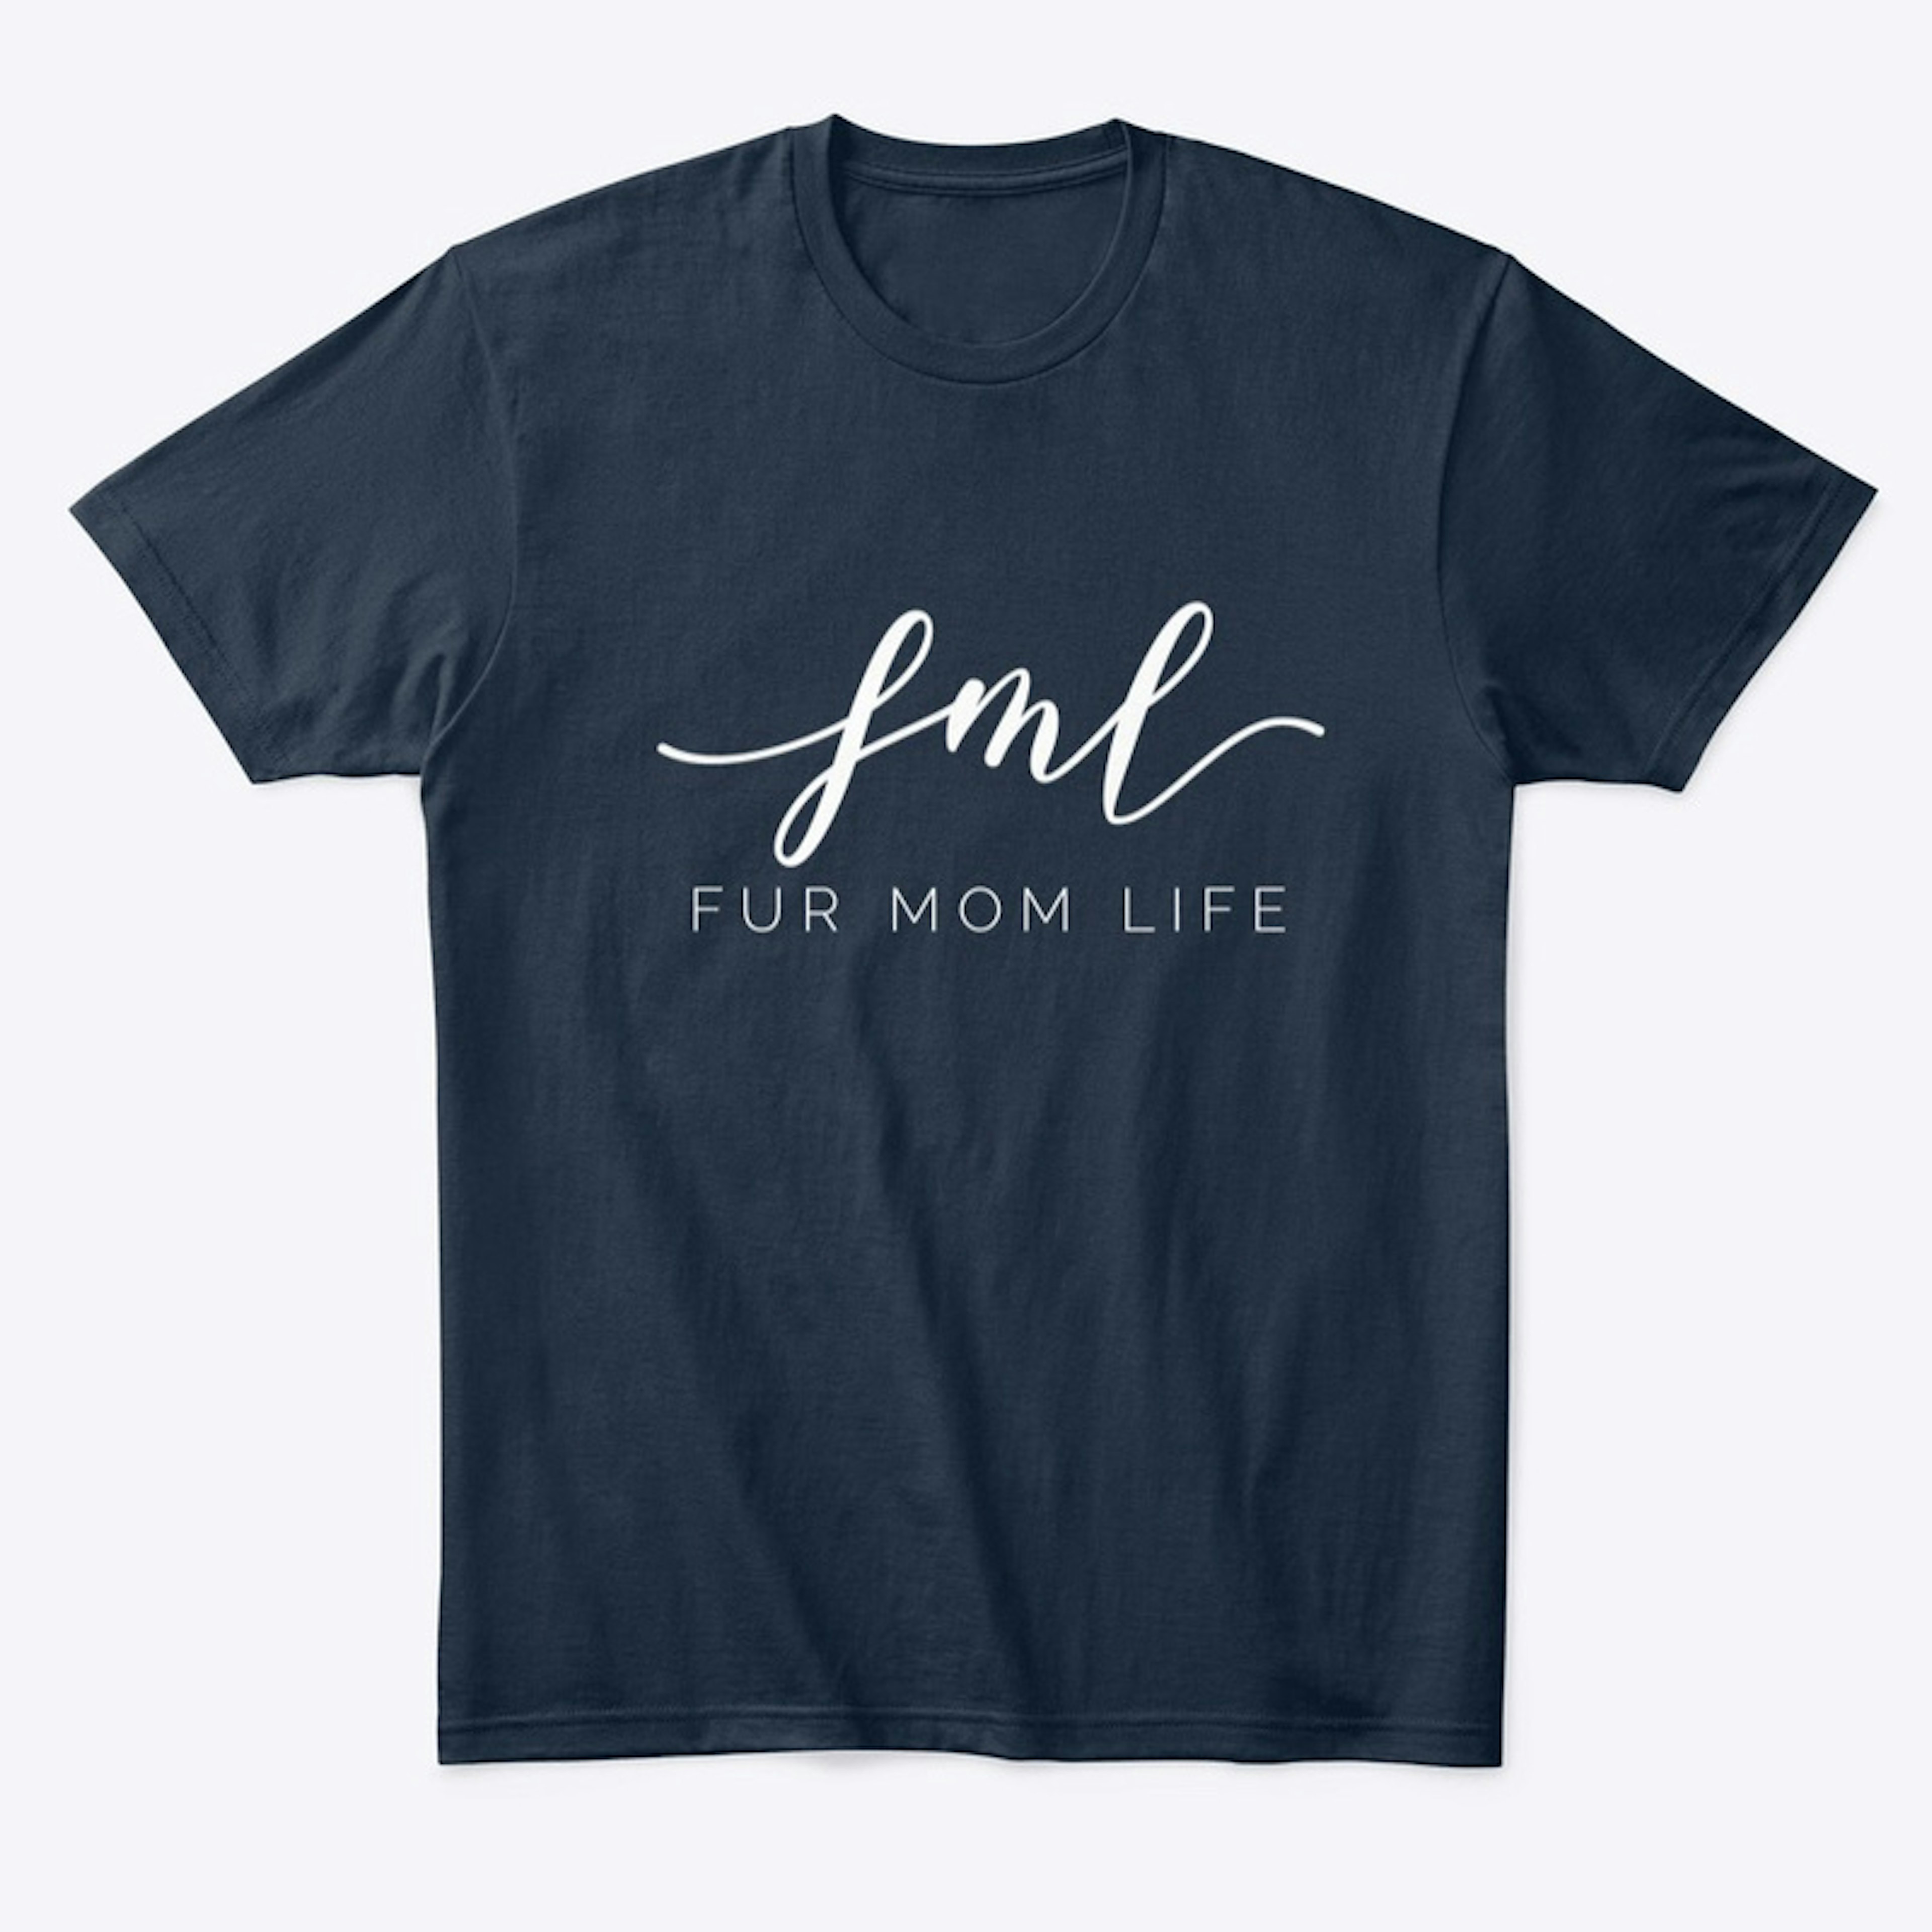 Fur Mom Life